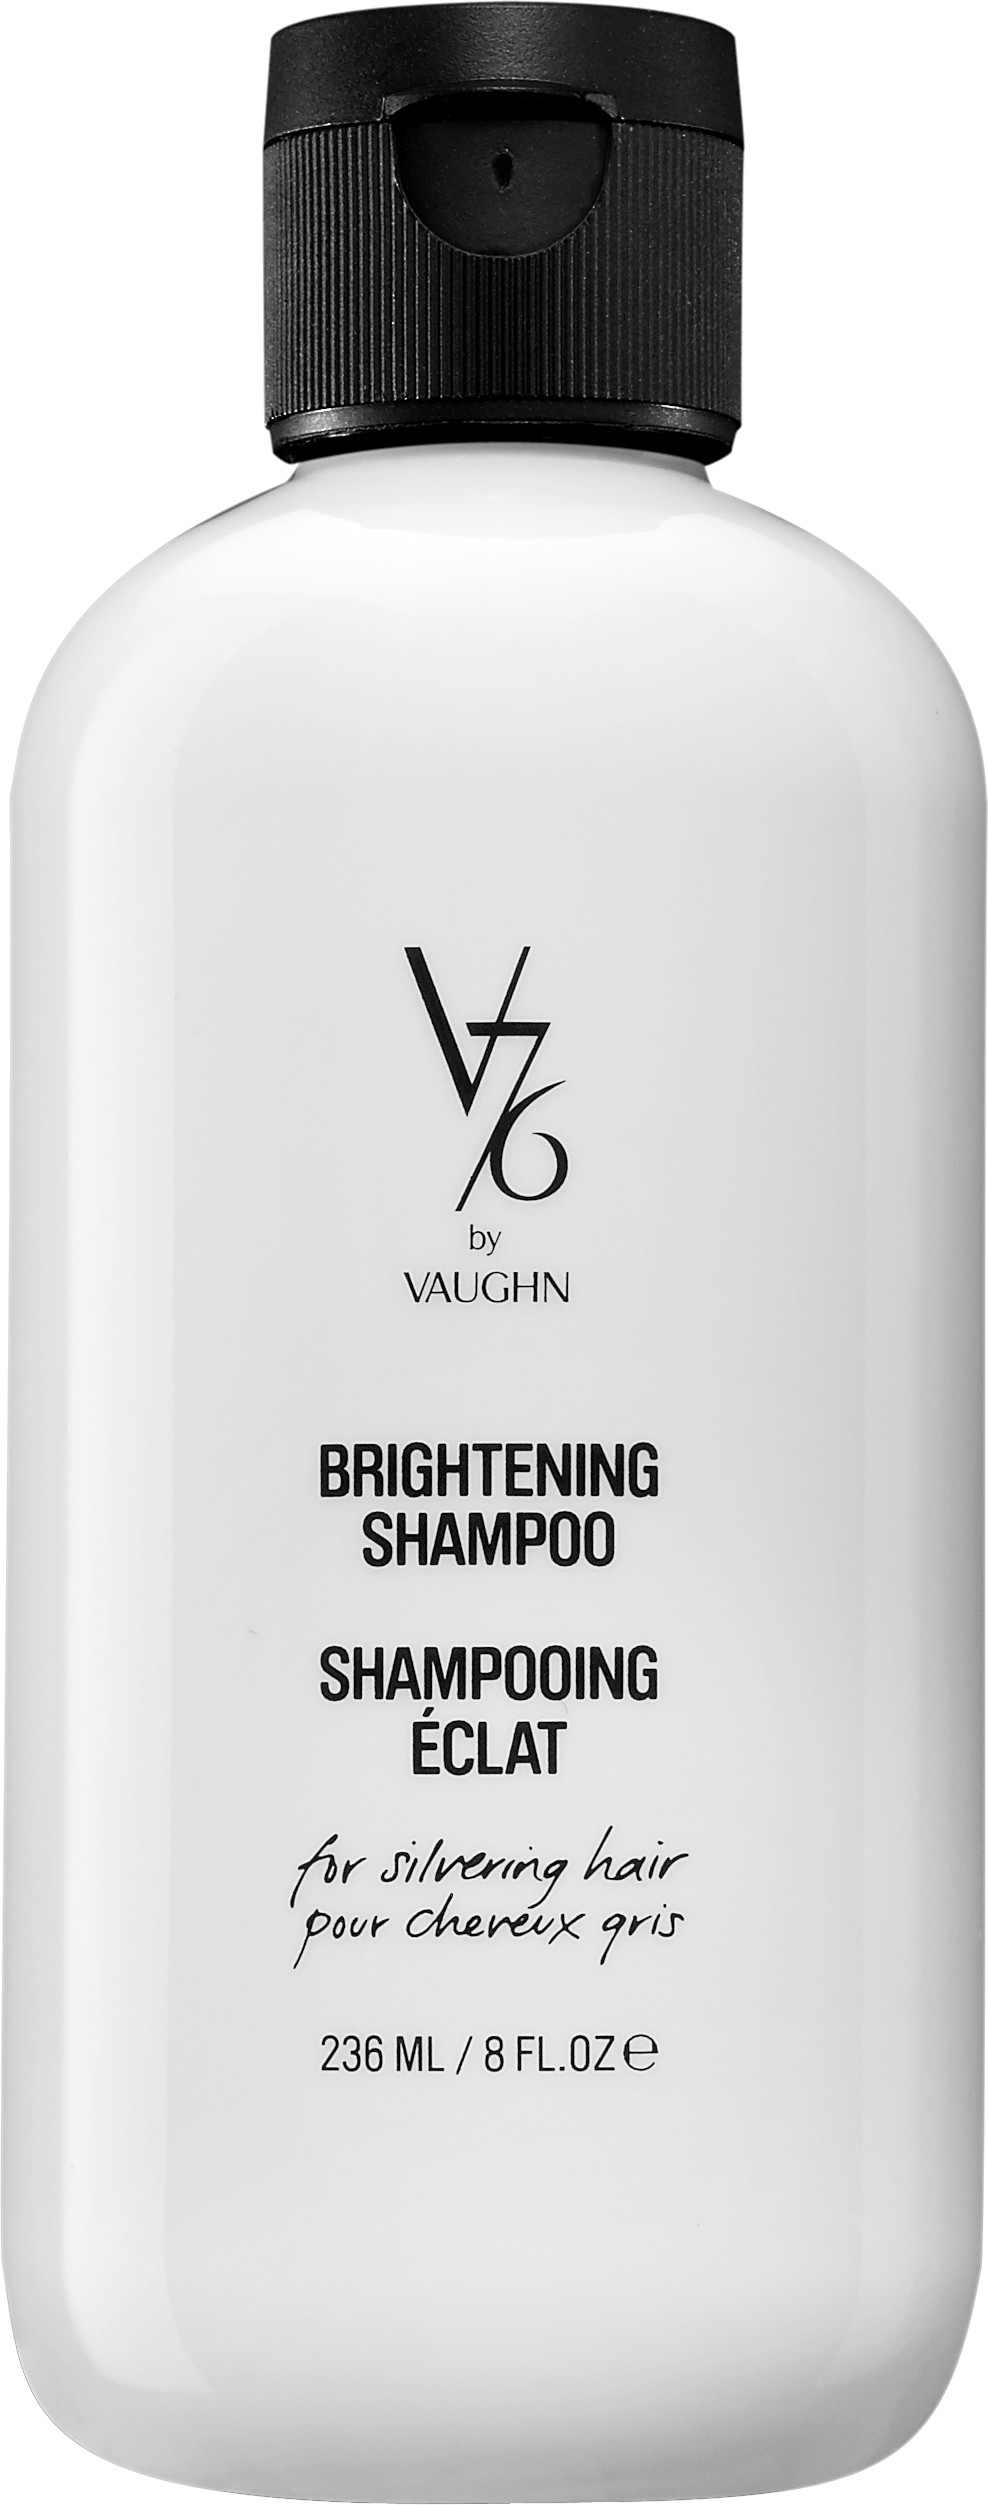 V76 by Vaughn Brightening Shampoo 236ml